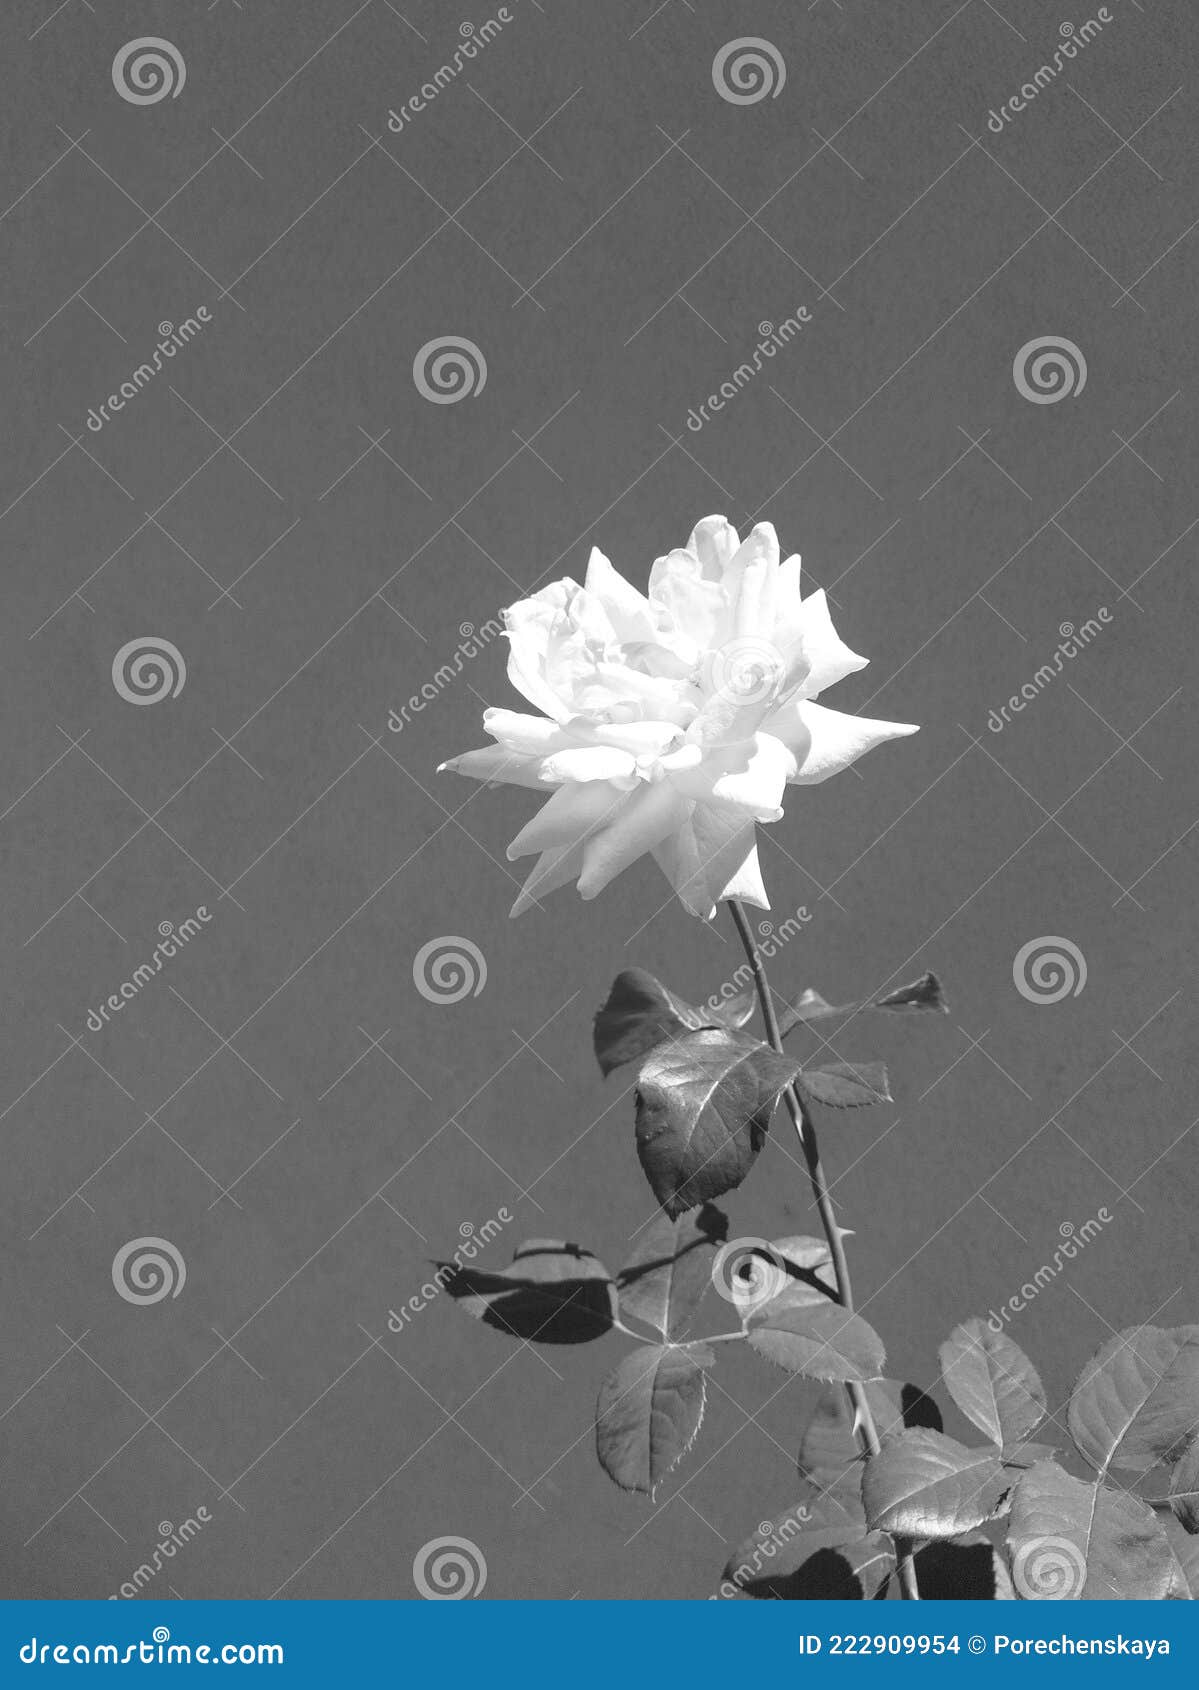 Stylish Flowers Wallpaper. Roses Minimalist Aesthetic Stock Photo - Image  of object, shadow: 222909954